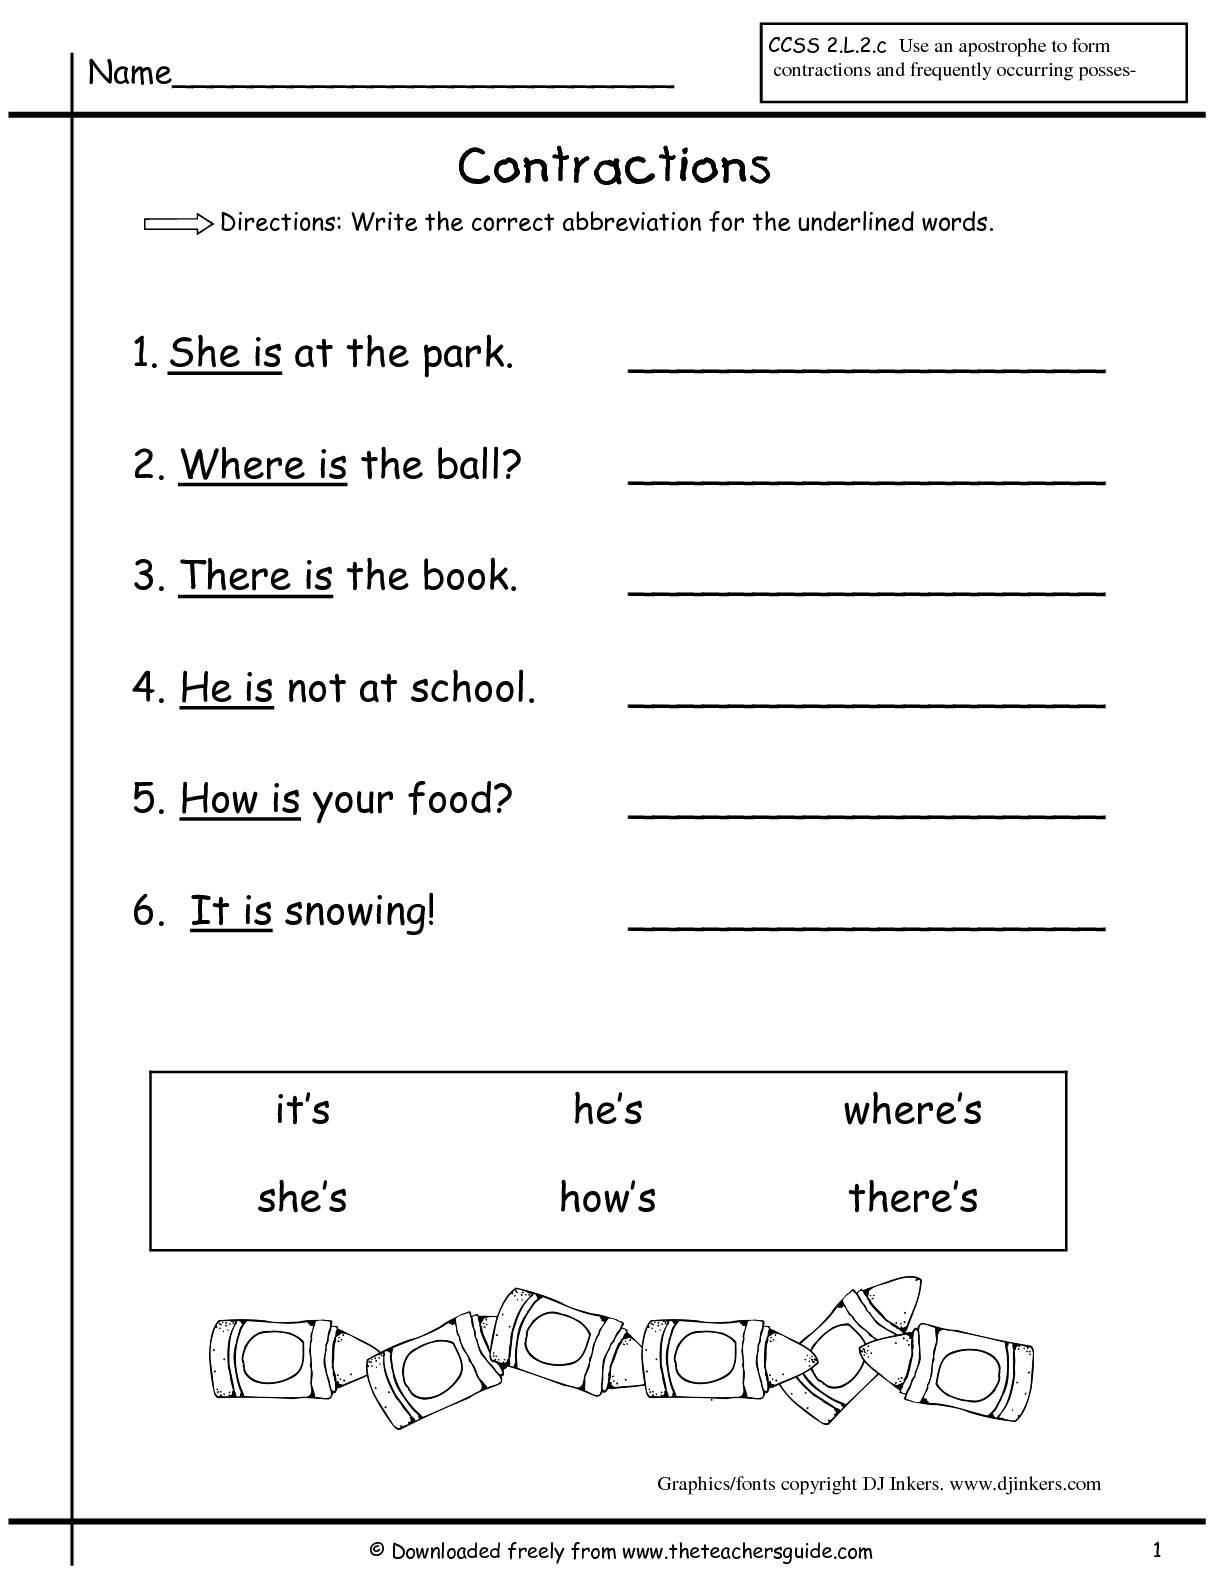 Science Worksheet For 1st Grade